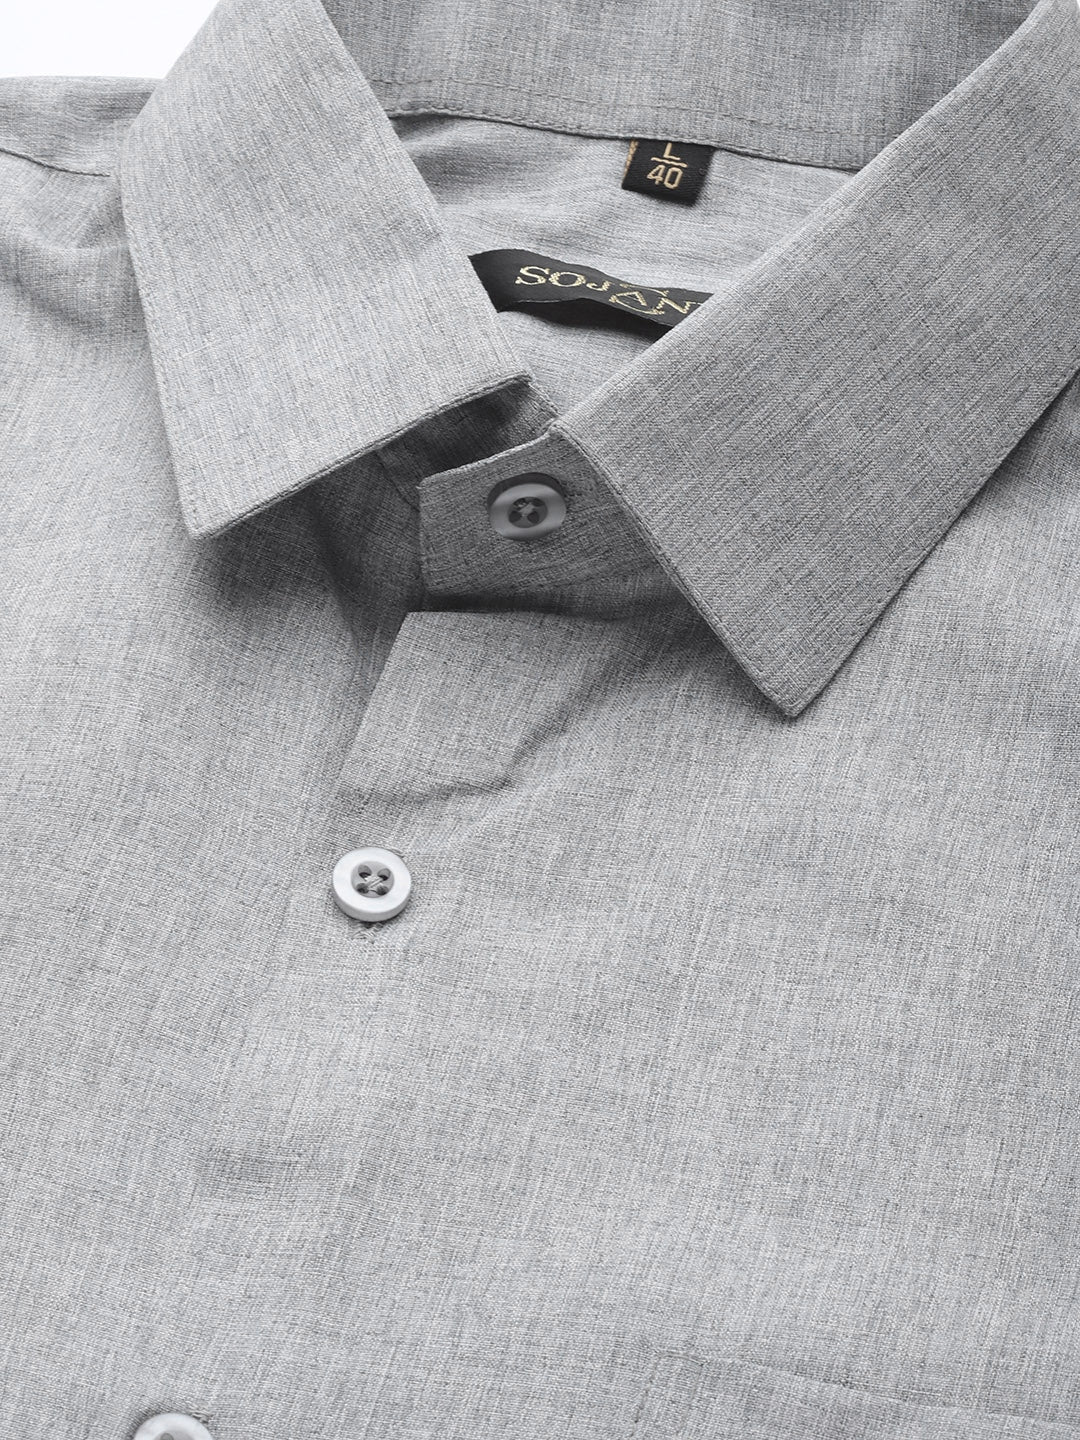 Men's Cotton Grey Casual Shirt